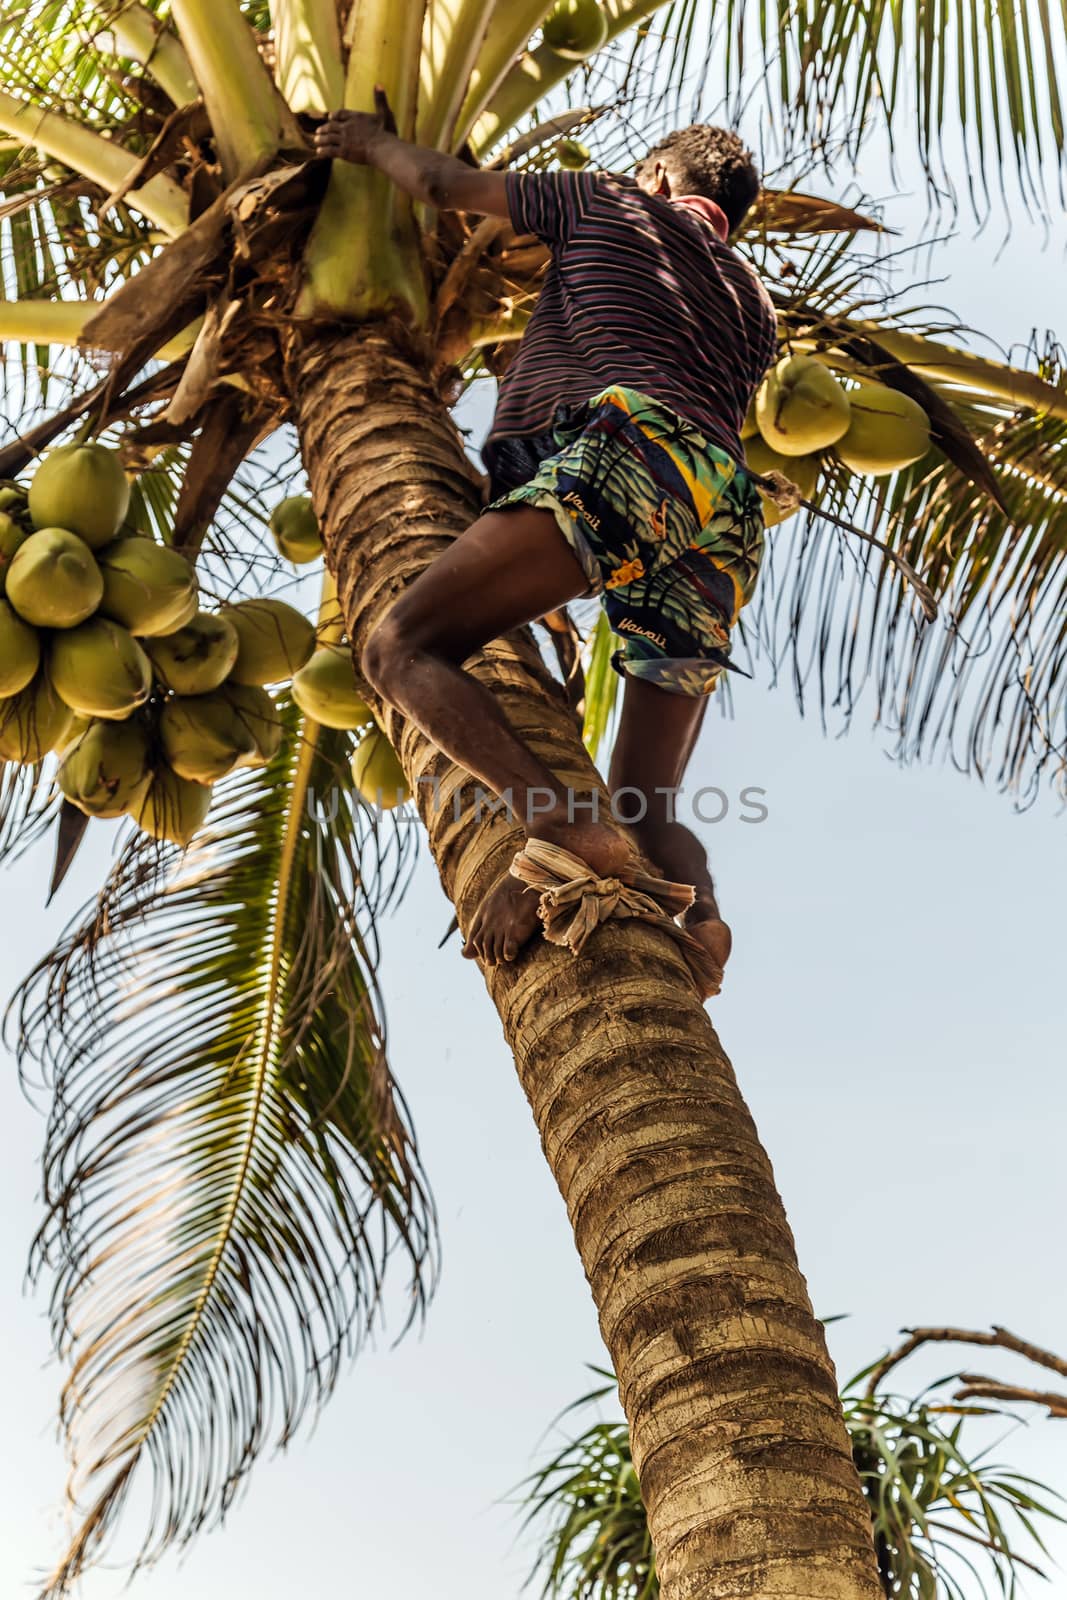 Sri Lanka Golden King coconut plantation. Man Climbing Cocos branch harvester harvests coconut palm tree trunk.